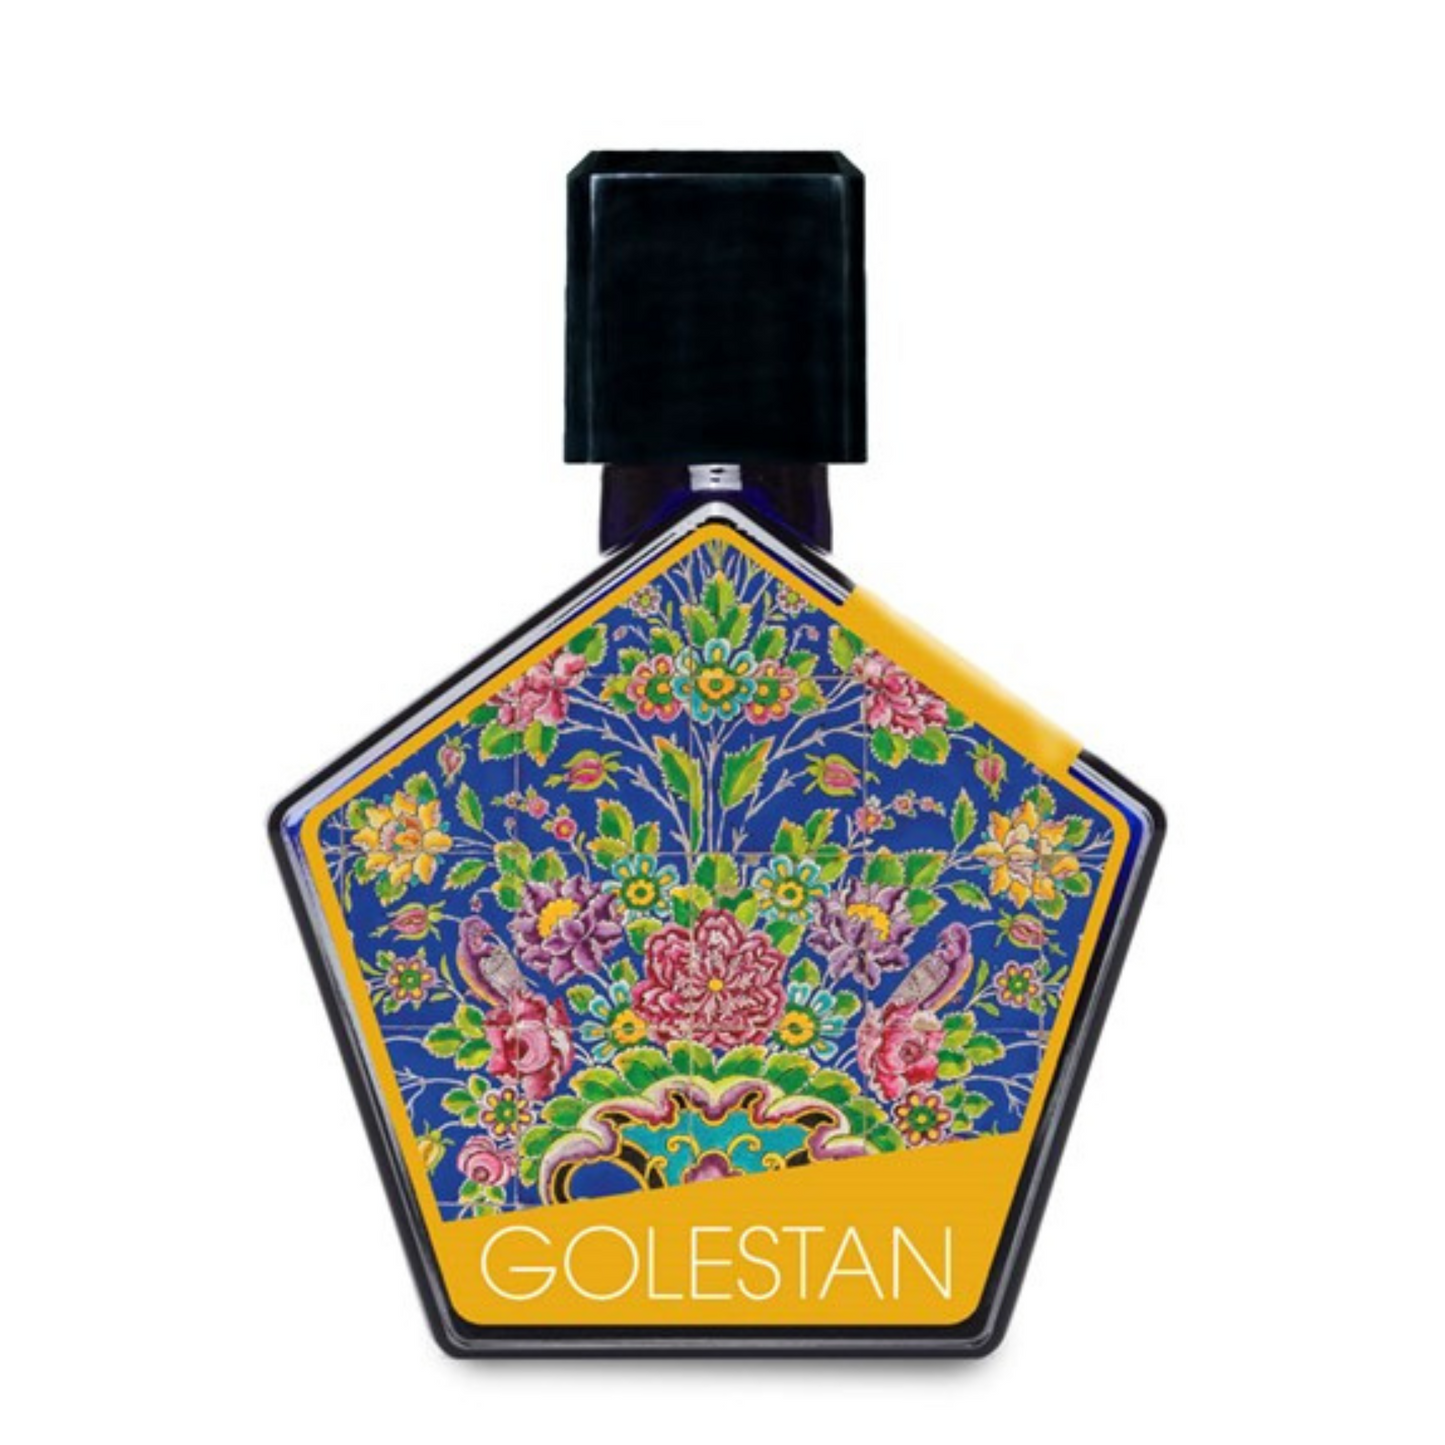 Primary Image of Tauer Perfumes Golestan Eau De Parfum (50 ml)